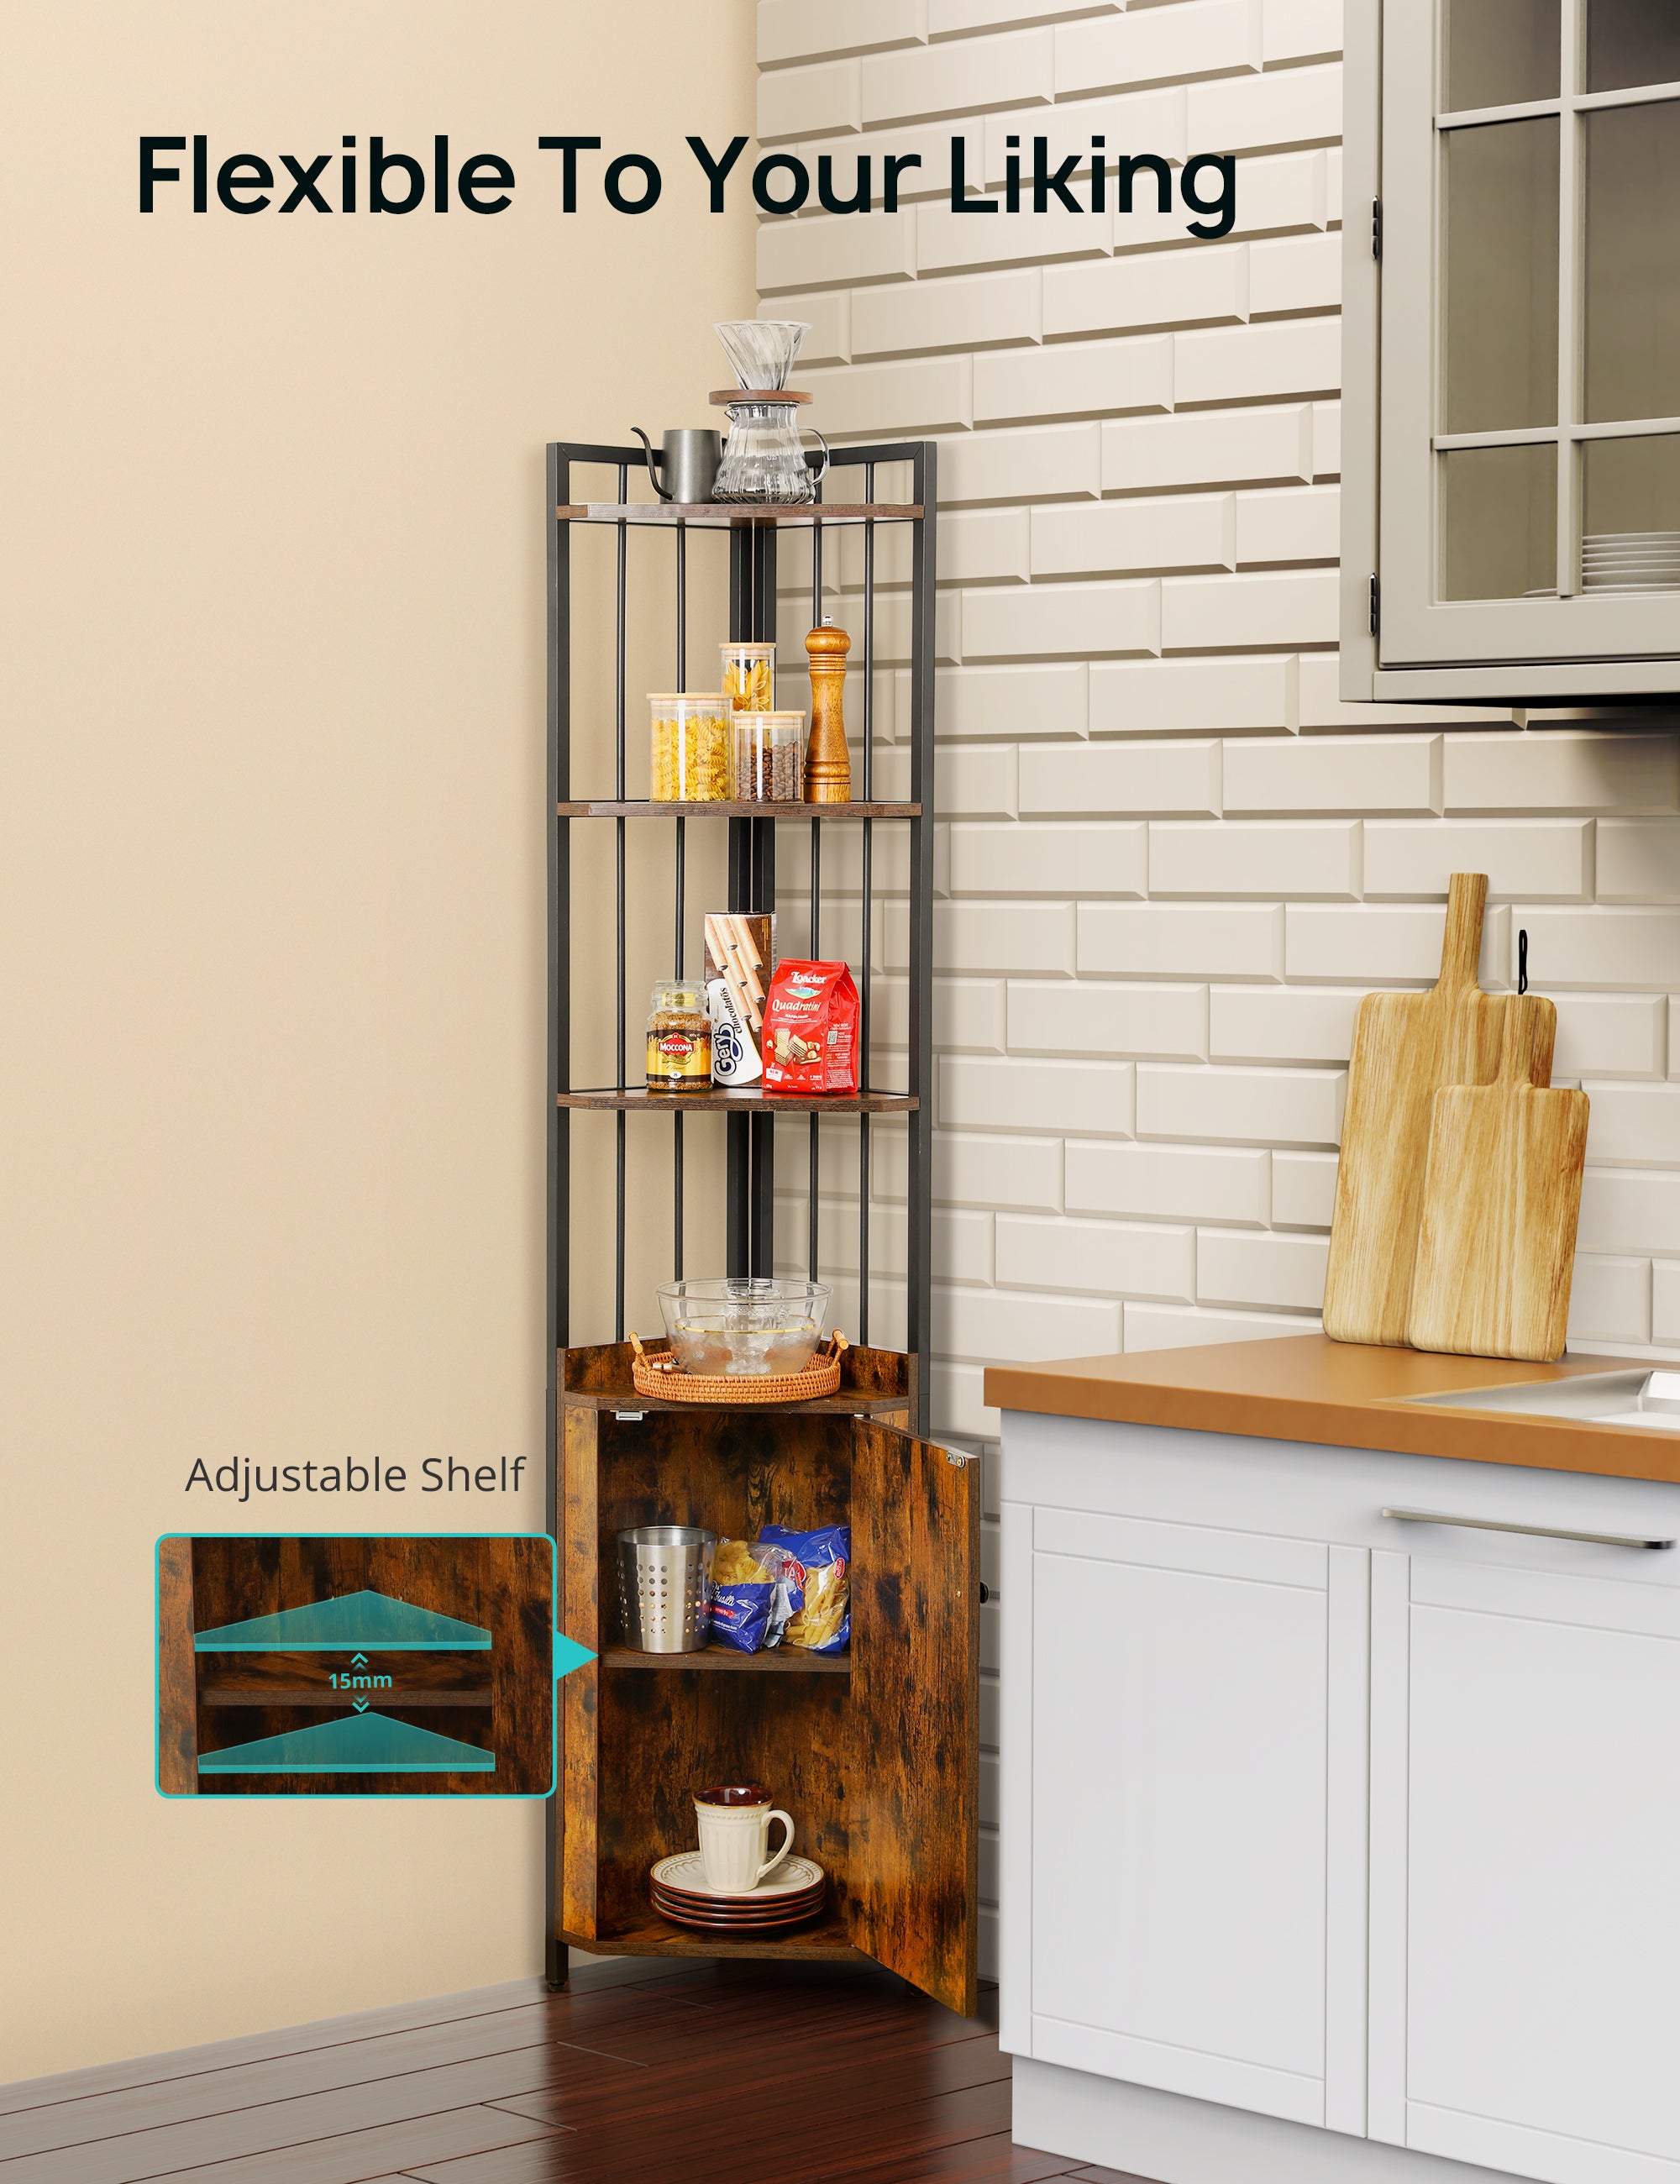 Evajoy LRF007 Corner Shelf 5-Tier with Storage, 71'' Industrial Rustic Tall Corner Bookshelf Stand